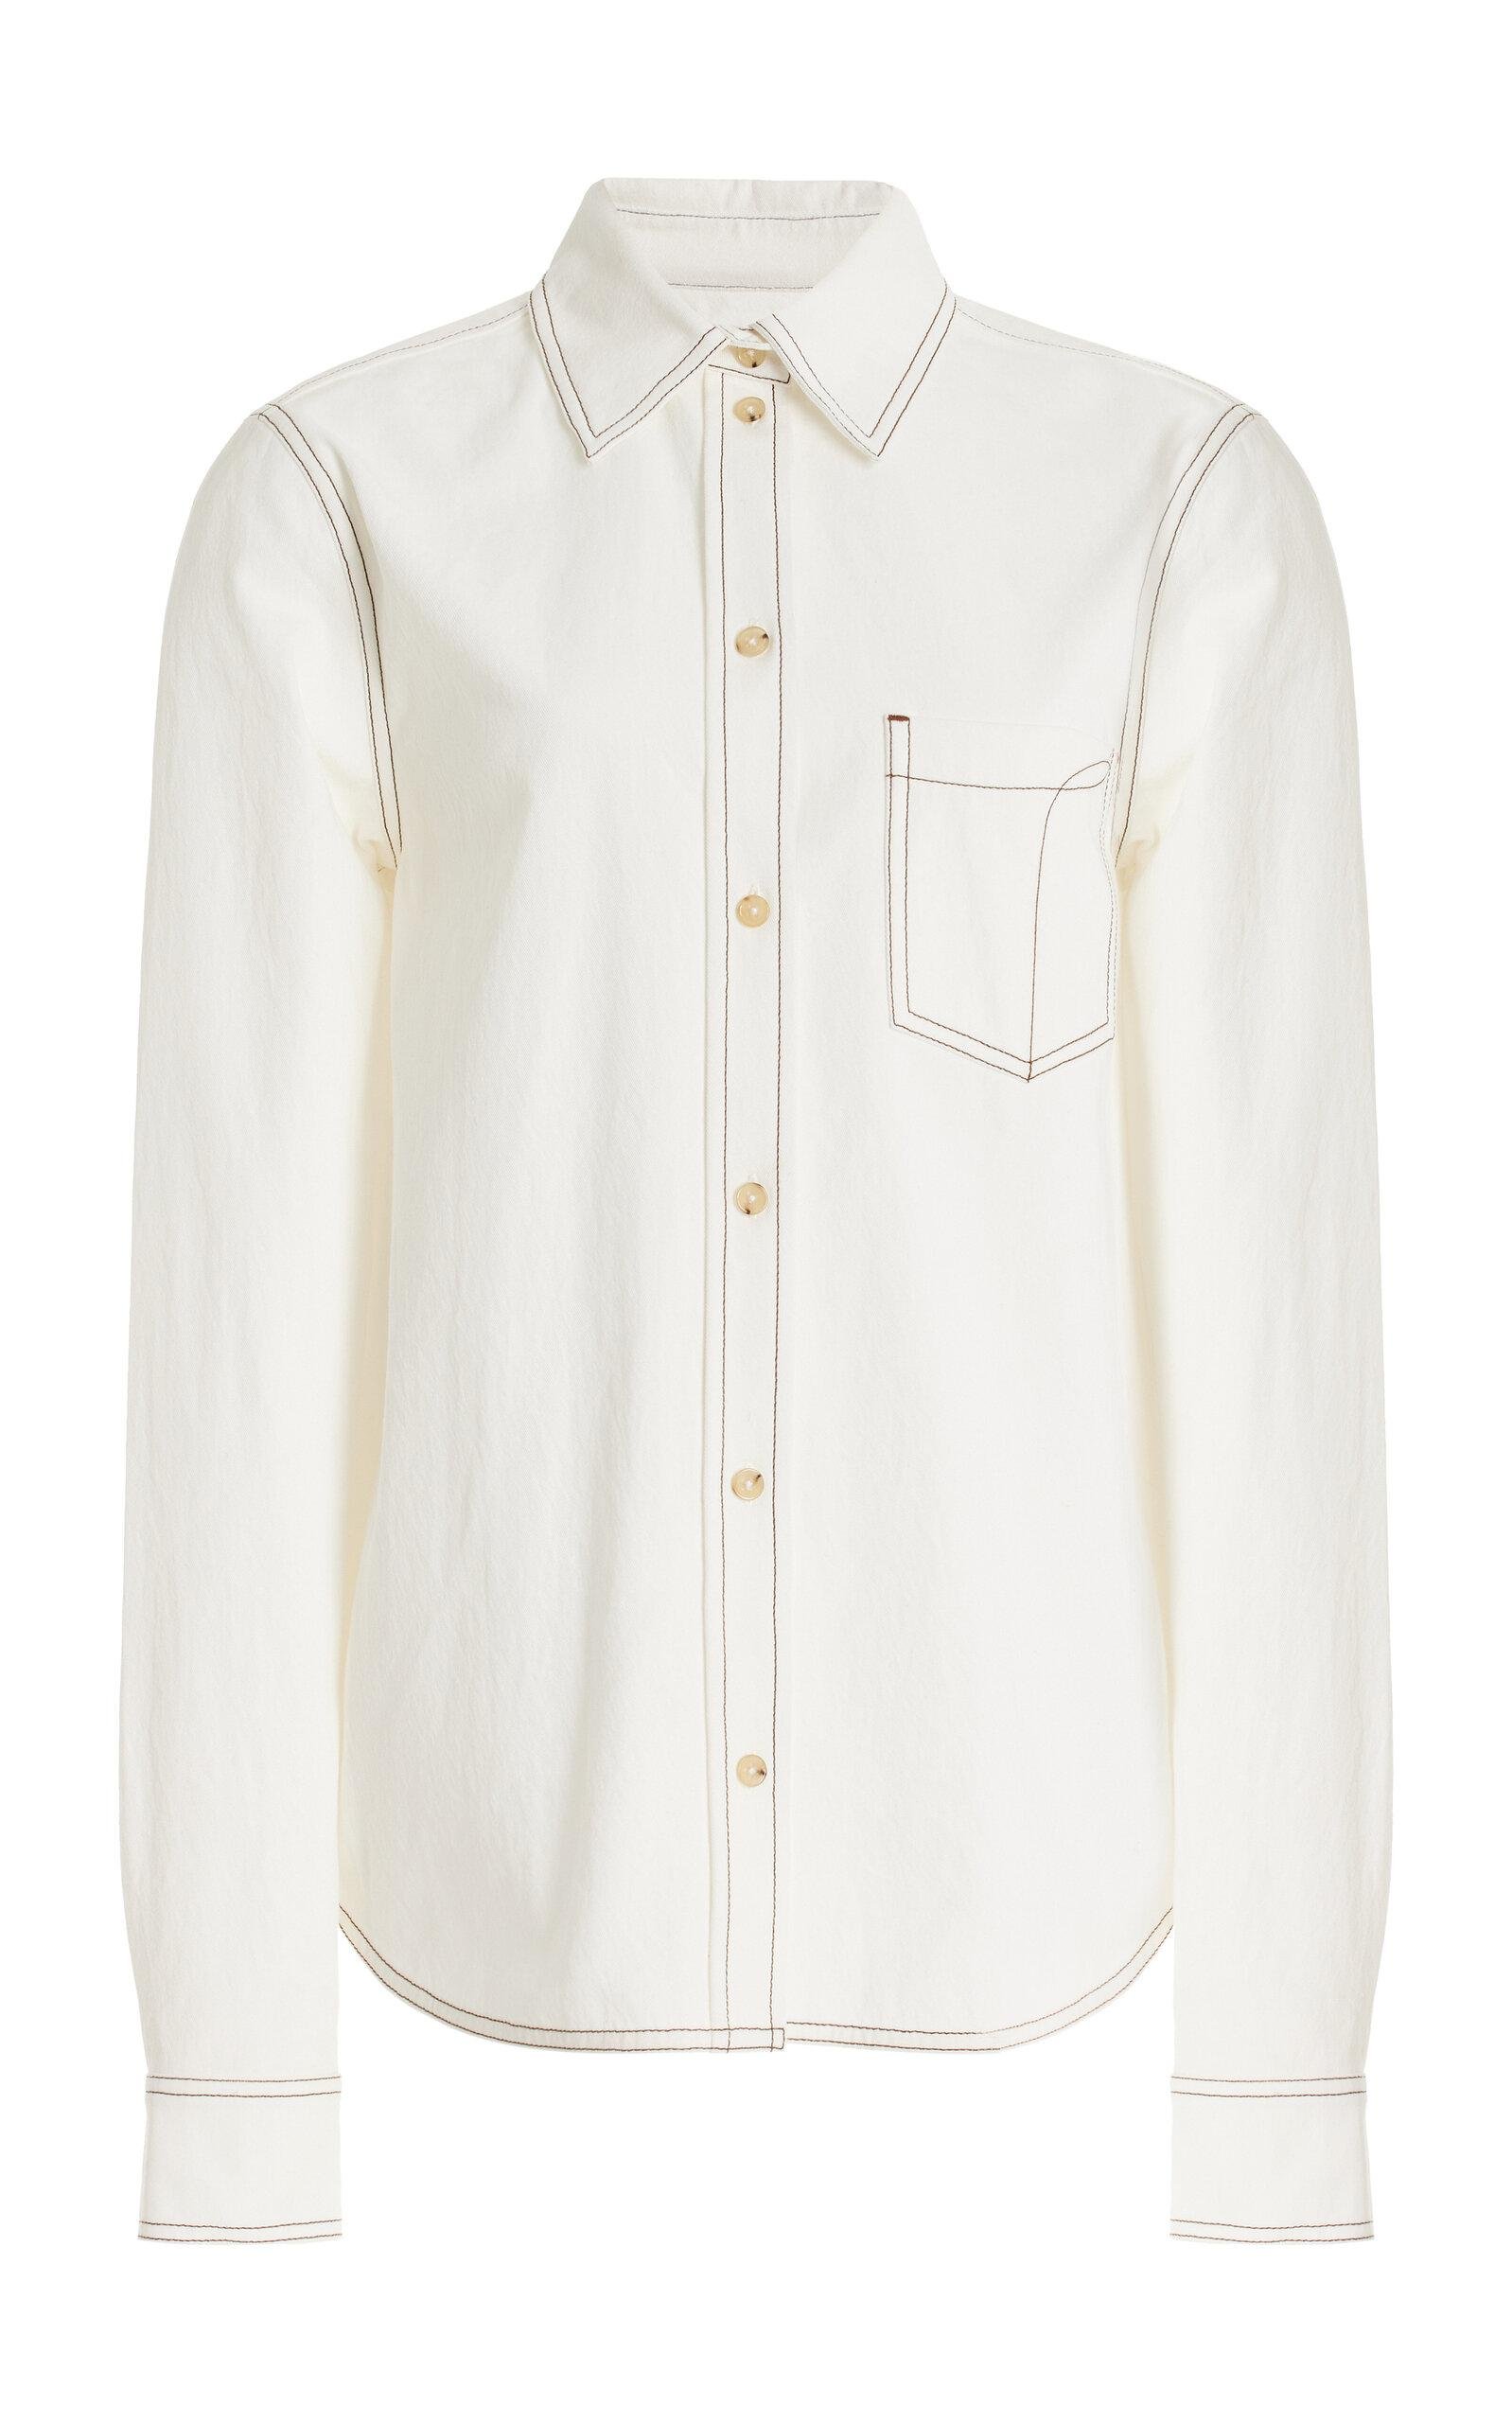 Toteme - Petite Tumbled Organic Cotton Shirt - White - FR 34 - Moda Operandi by TOTEME